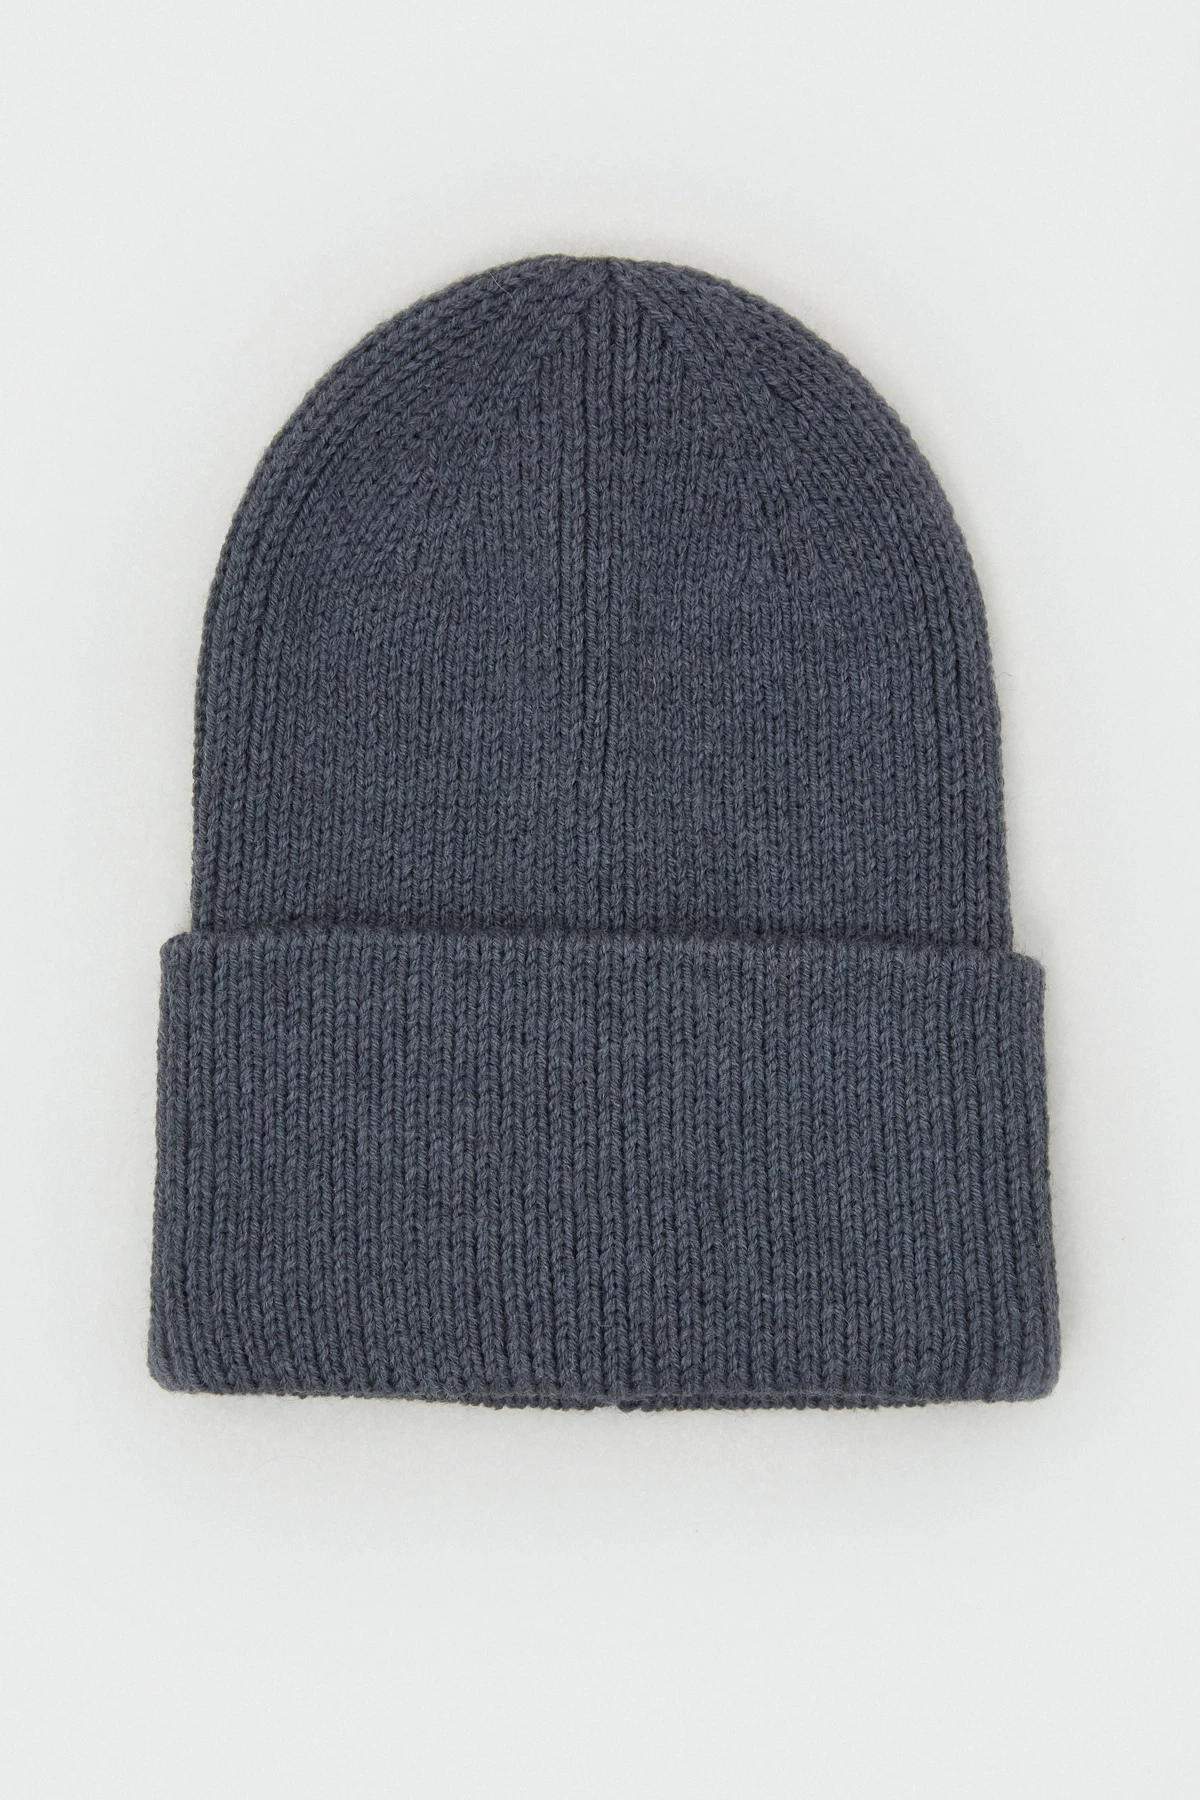 Knitted woolen gray beanie hat, photo 2